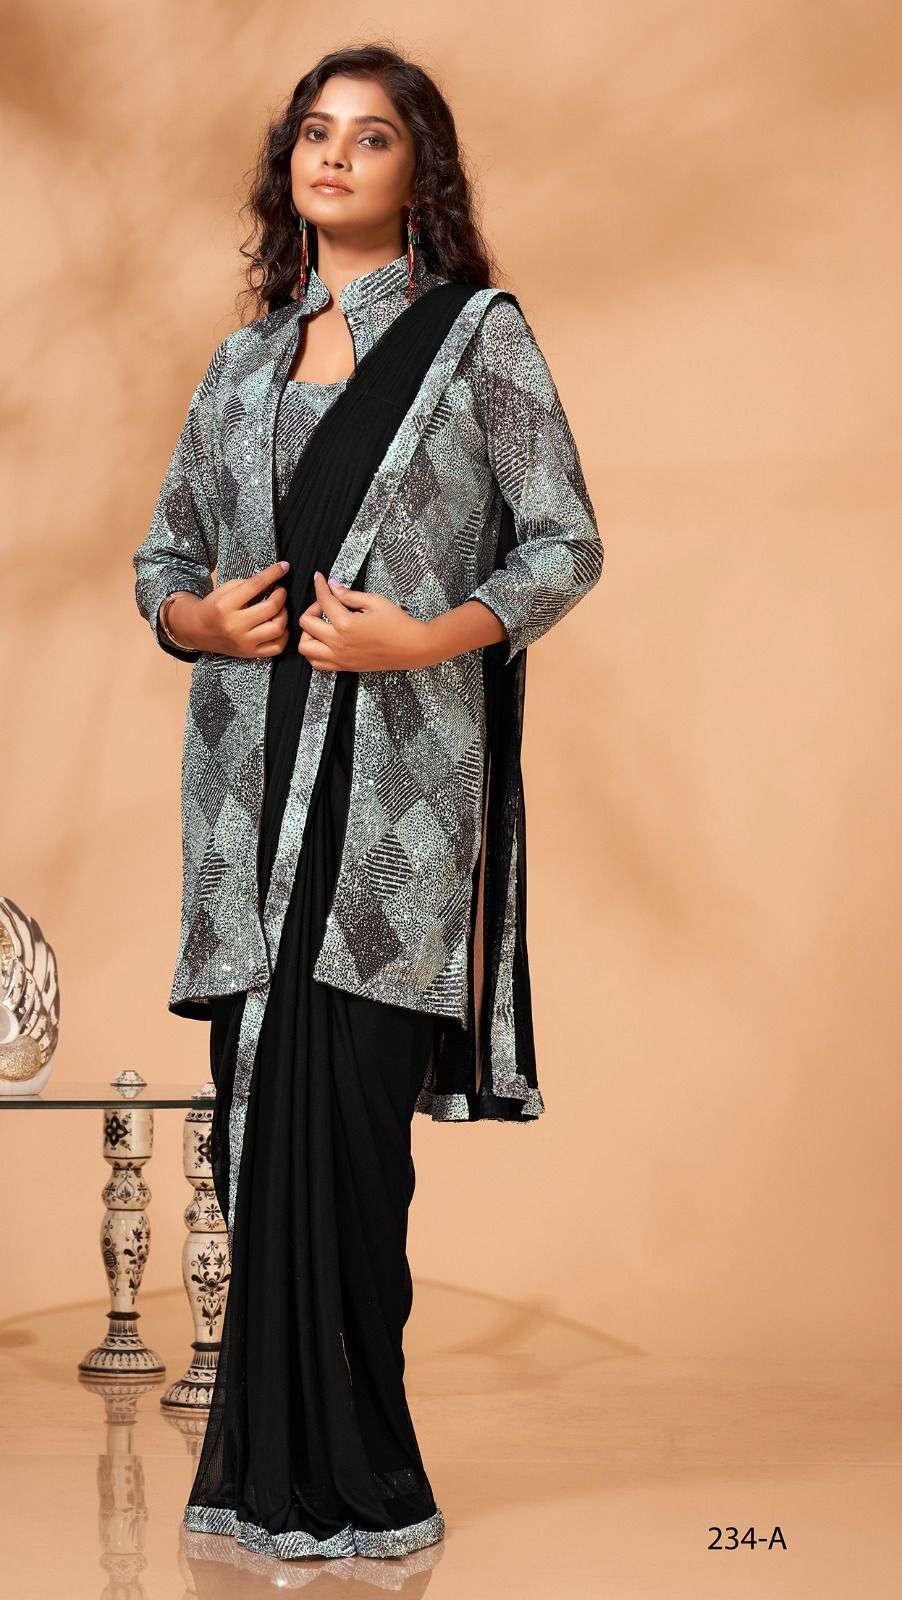 Women Saree Rain Jacket - Buy Women Saree Rain Jacket online in India